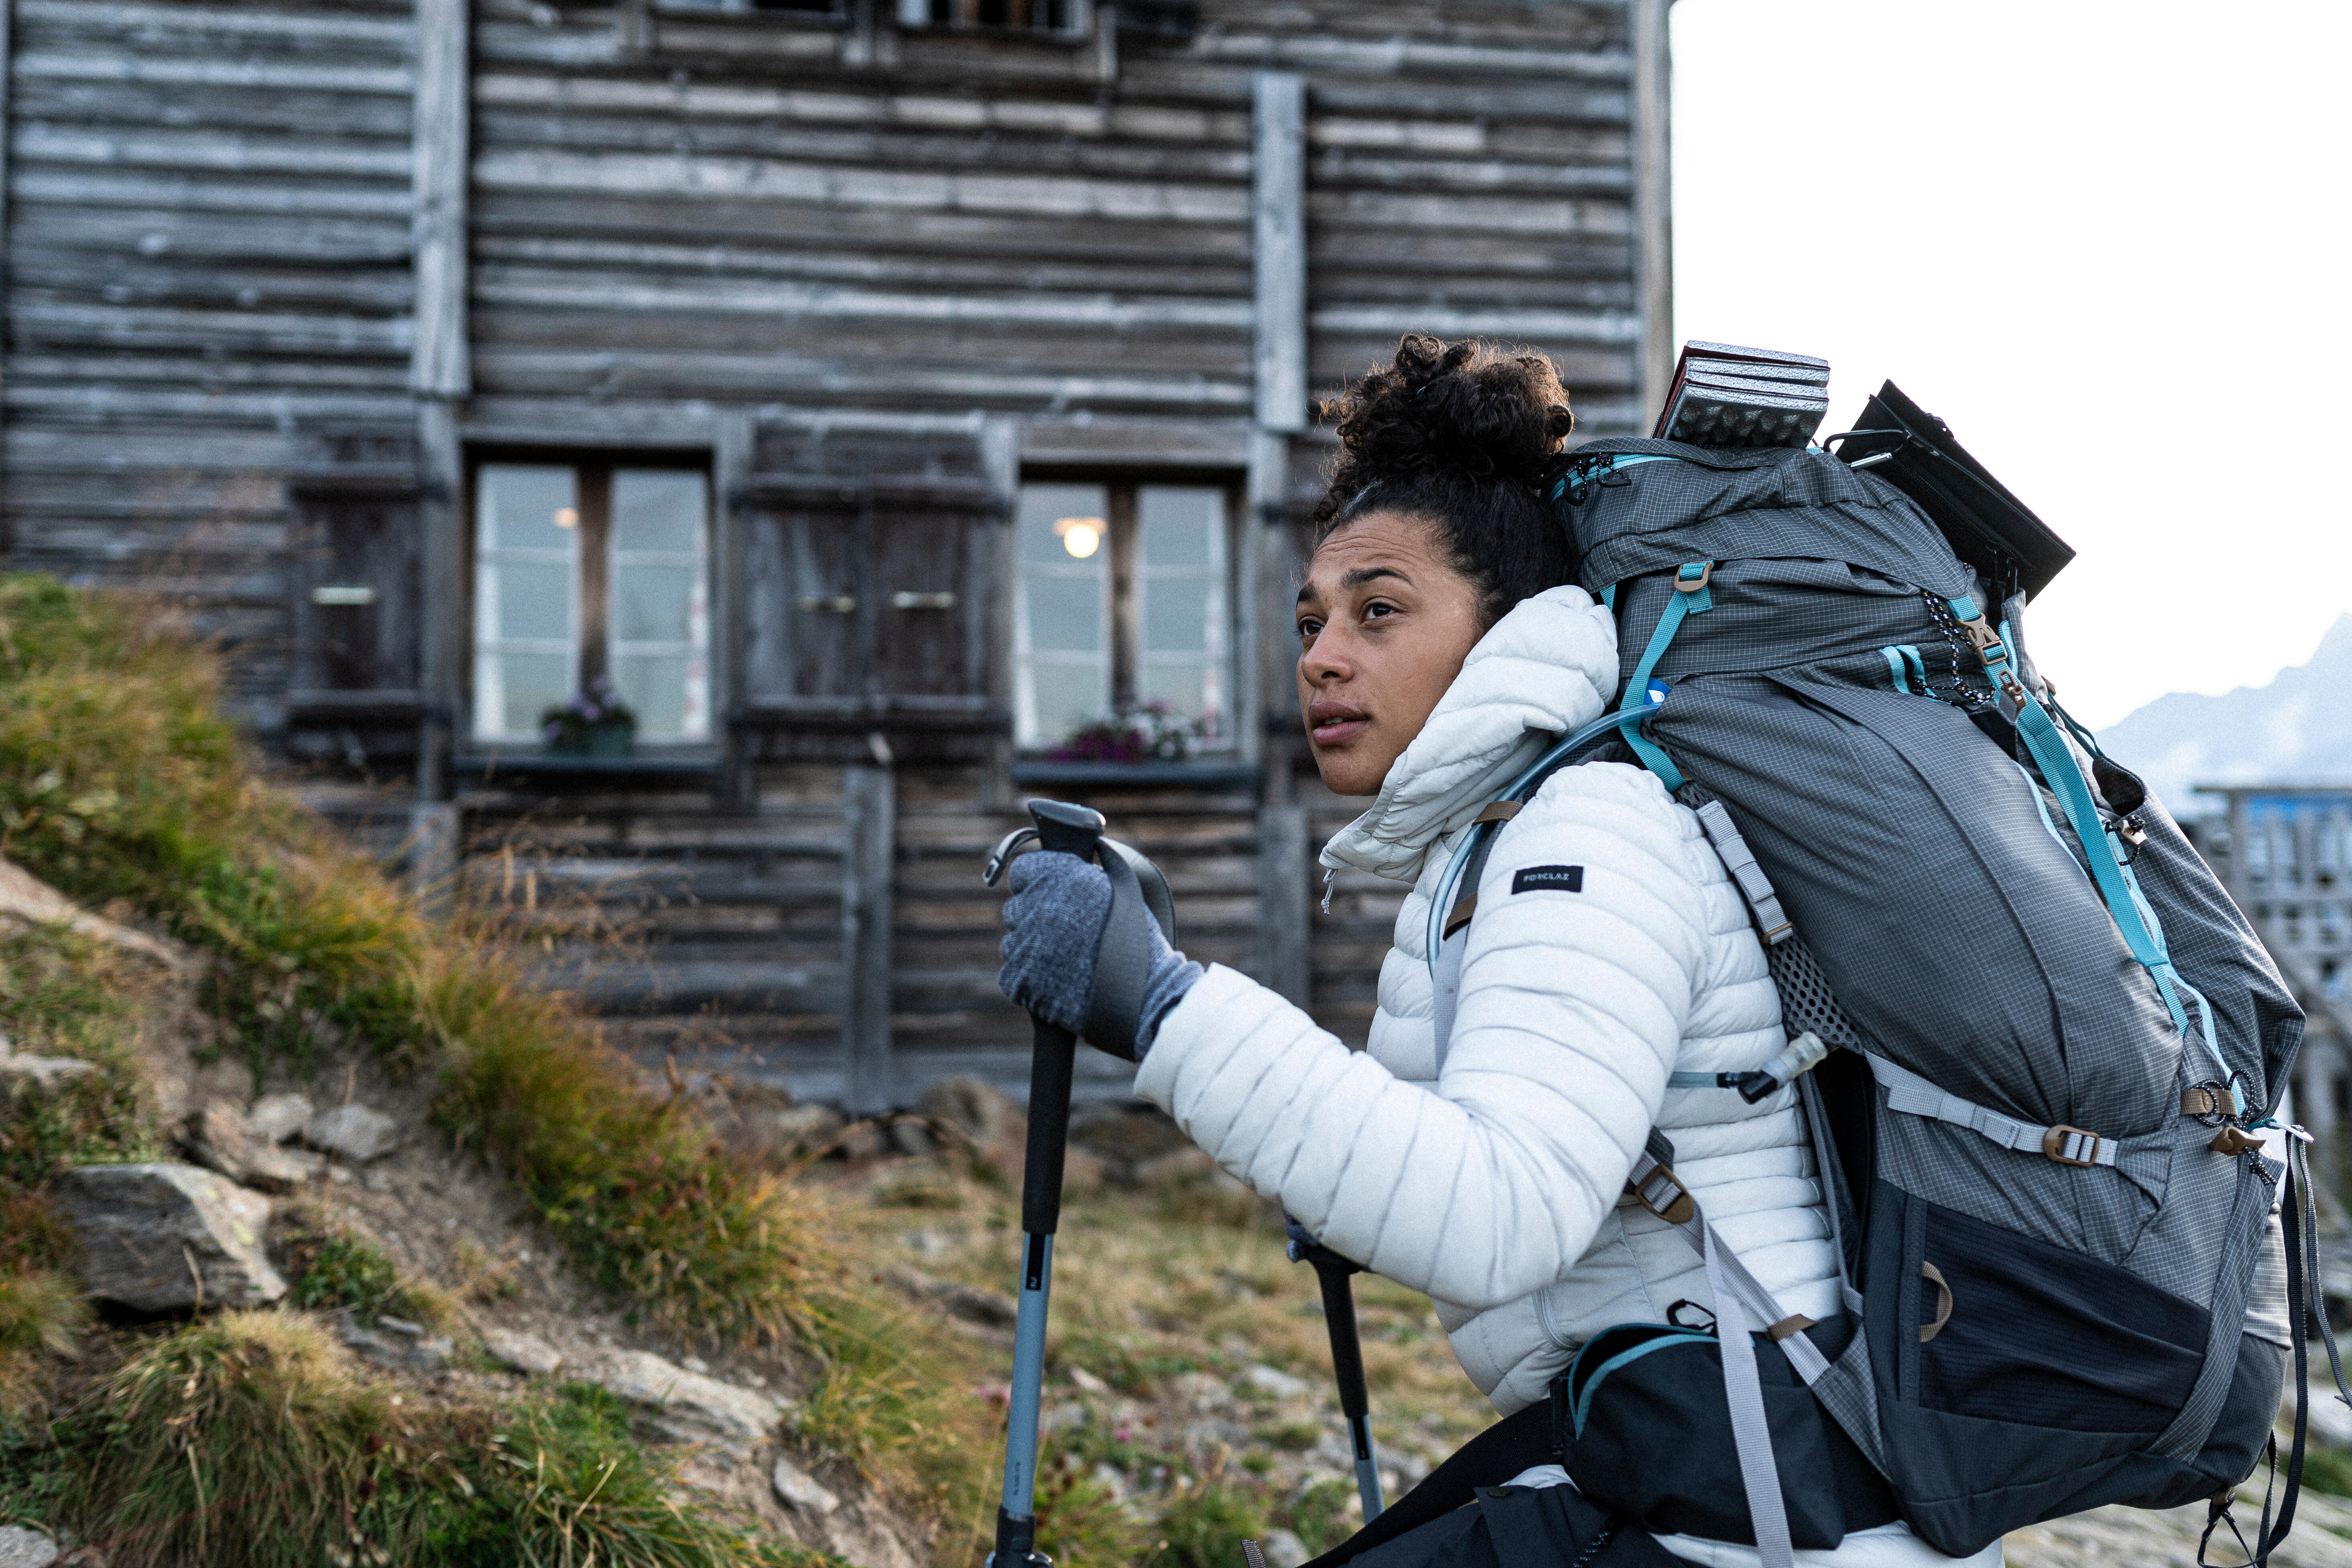 Women’s Hiking Backpack 45 L + 10 L - MT 500 Air - FORCLAZ